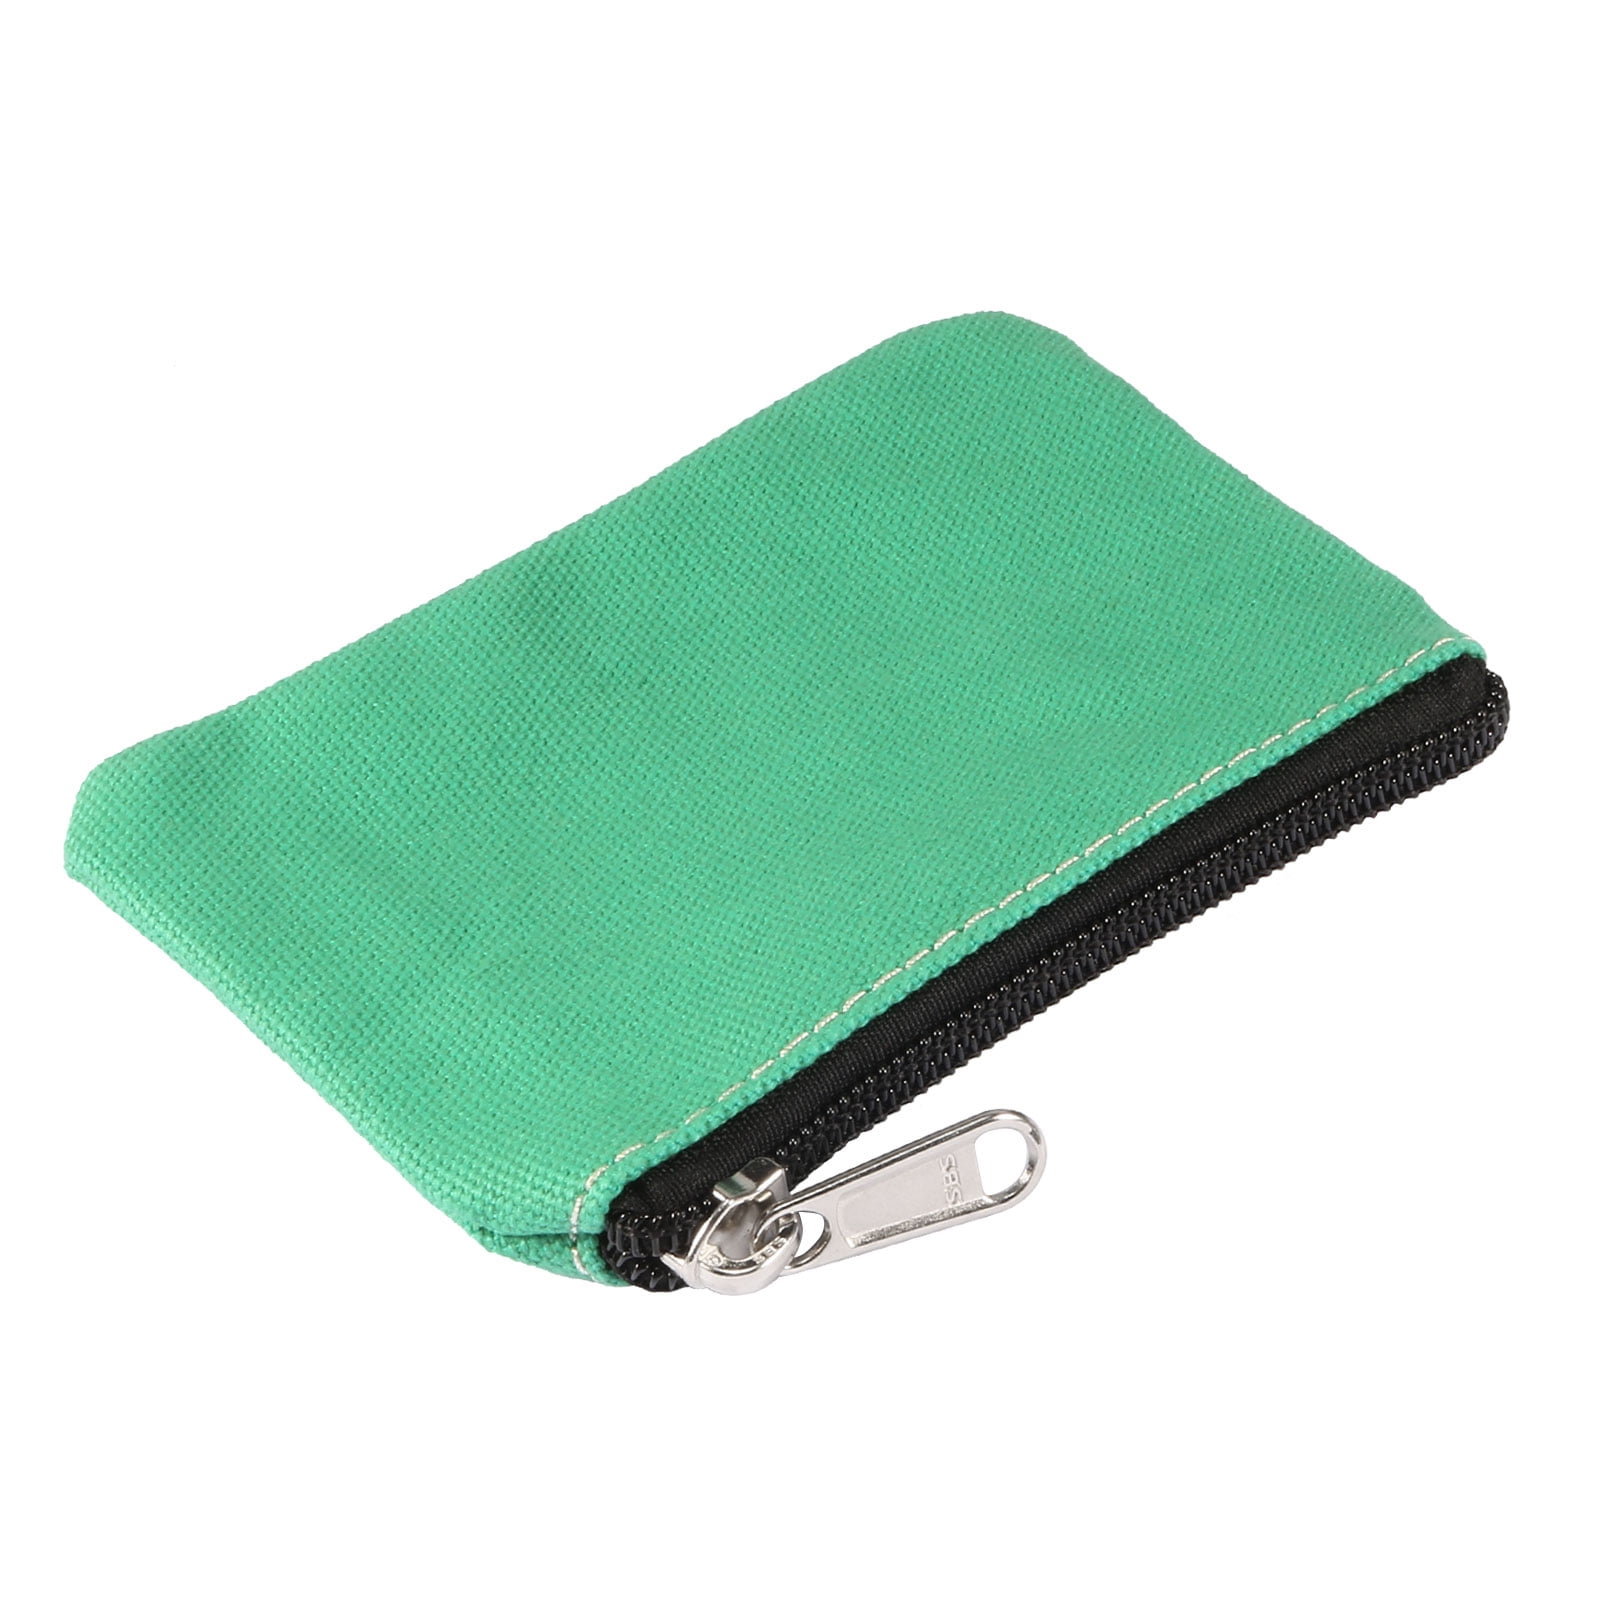 Coin Purse Pouch, Change Purses Small Organizer Bags Zipper 3 x 5, Green